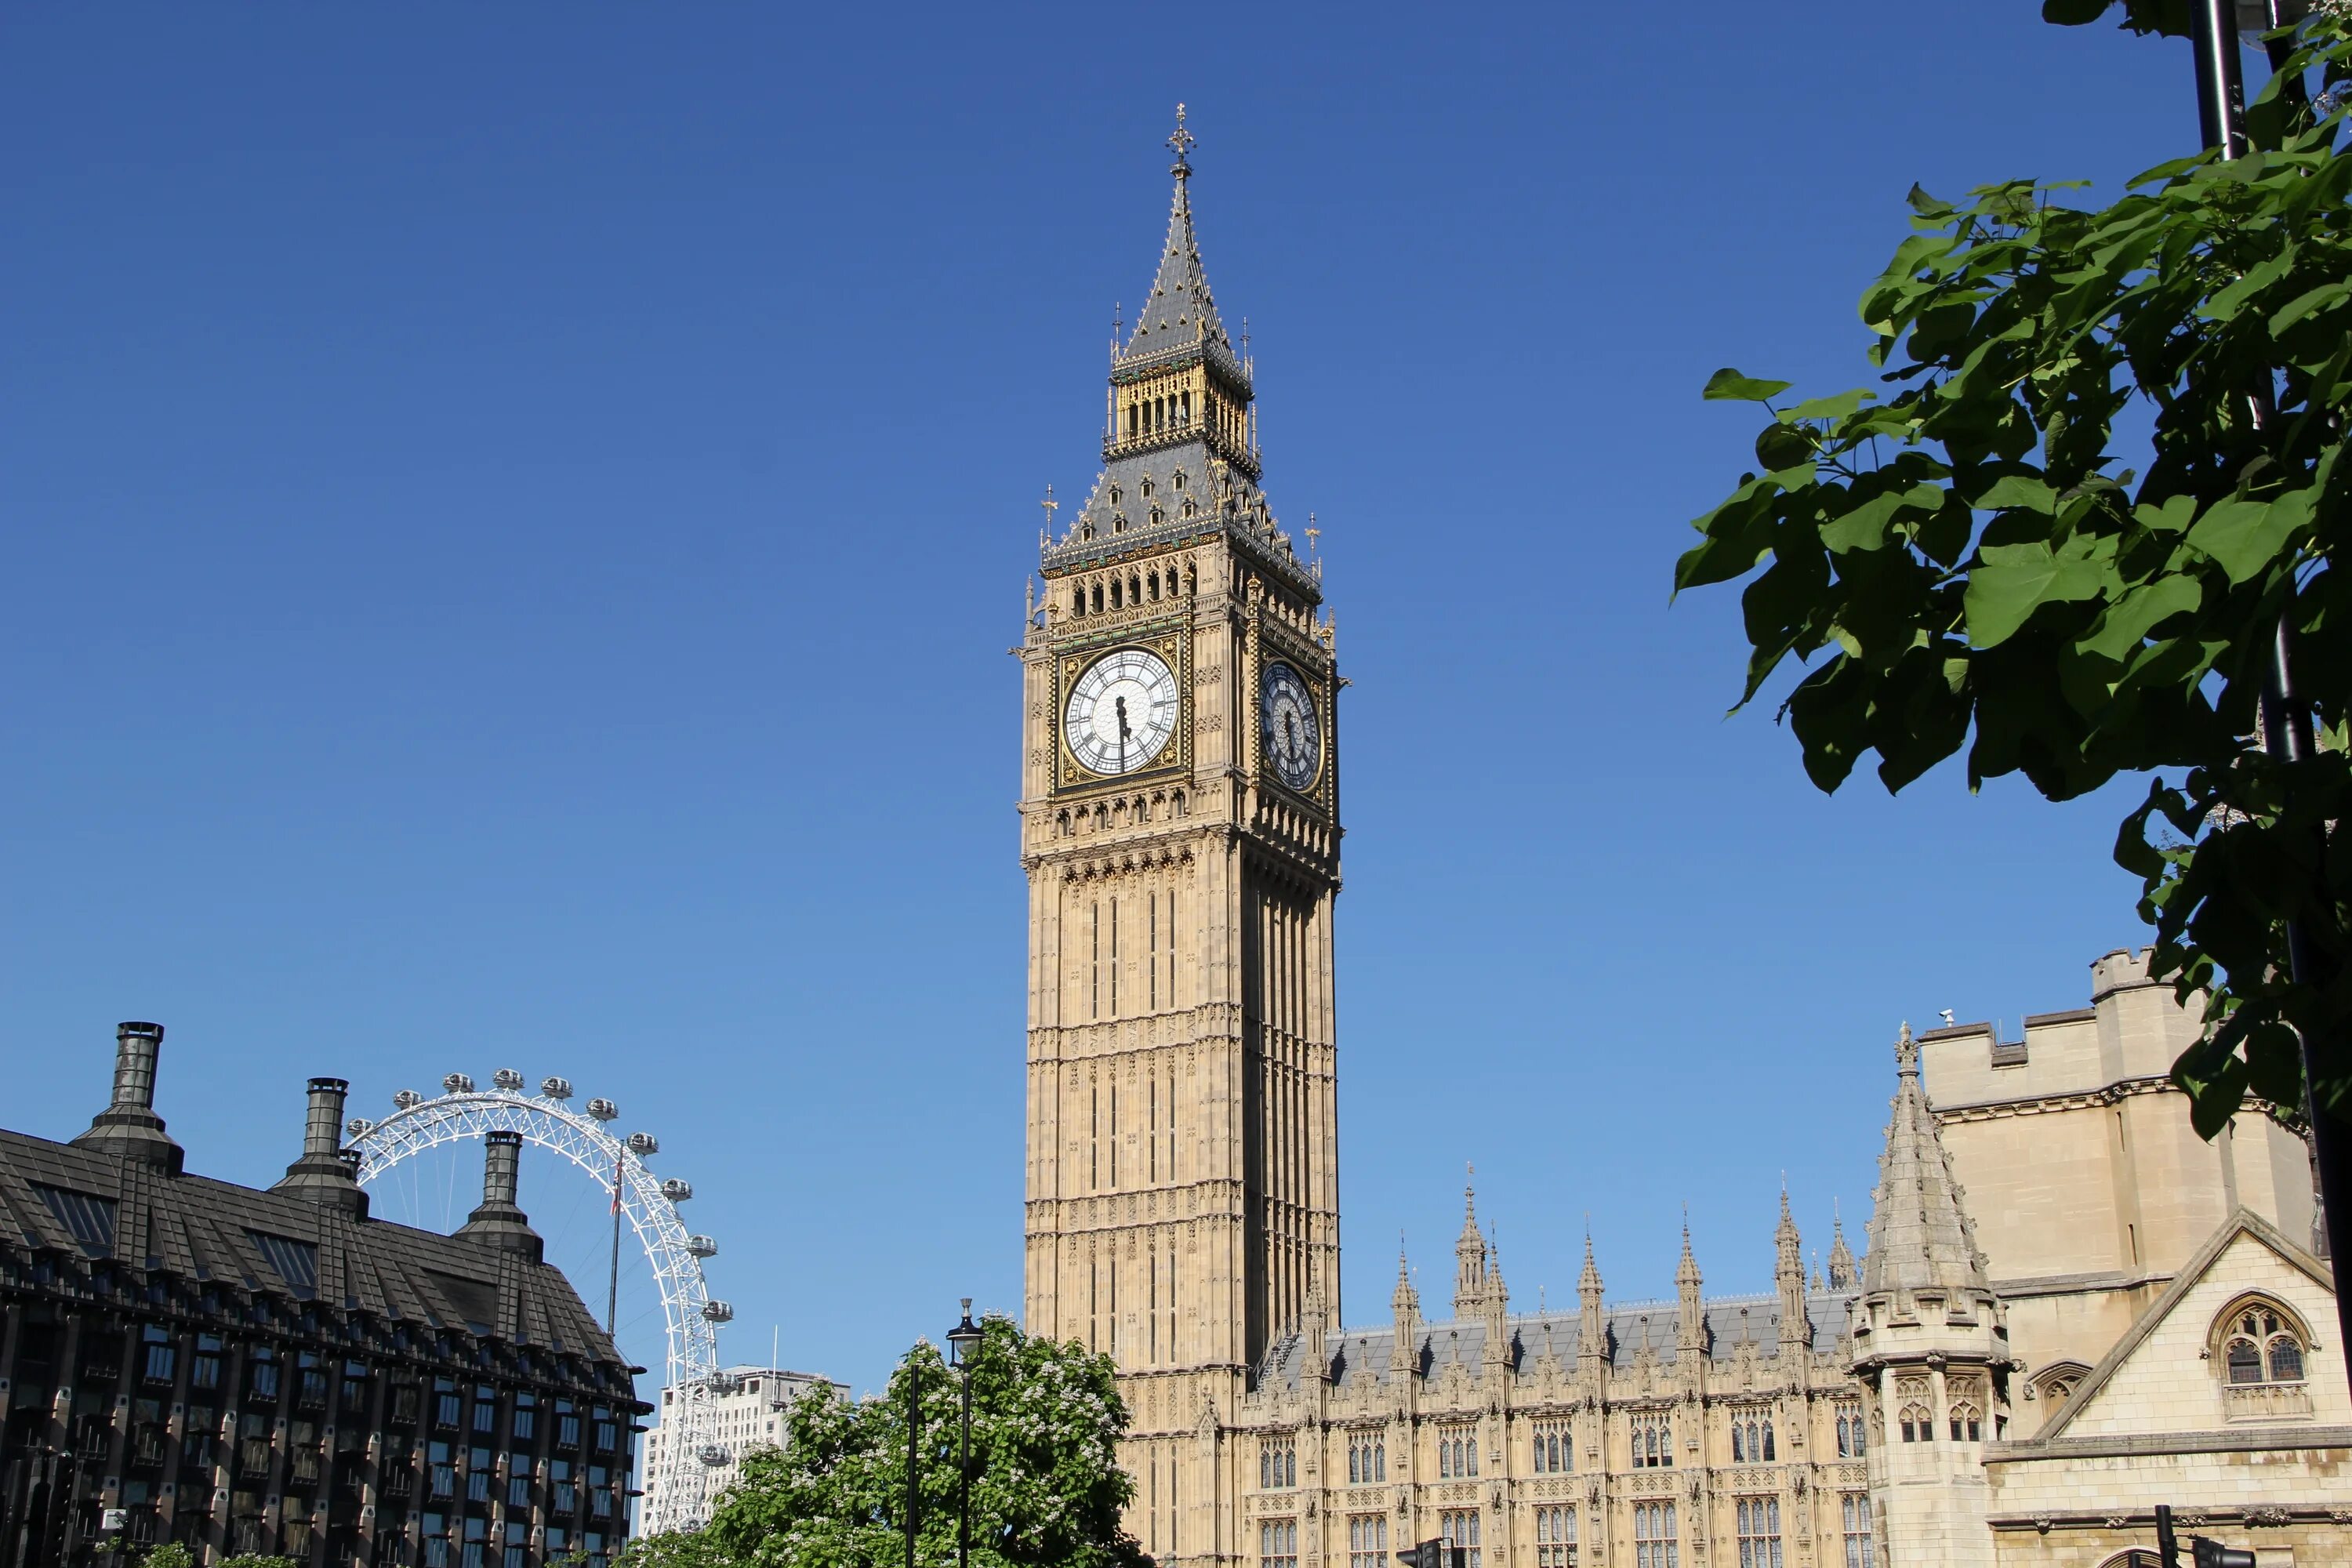 Watching britain. Башня Биг Бен в Лондоне. Часовая башня Вестминстерского дворца. Биг-Бен (башня Елизаветы). Часовая башня Биг Бен.